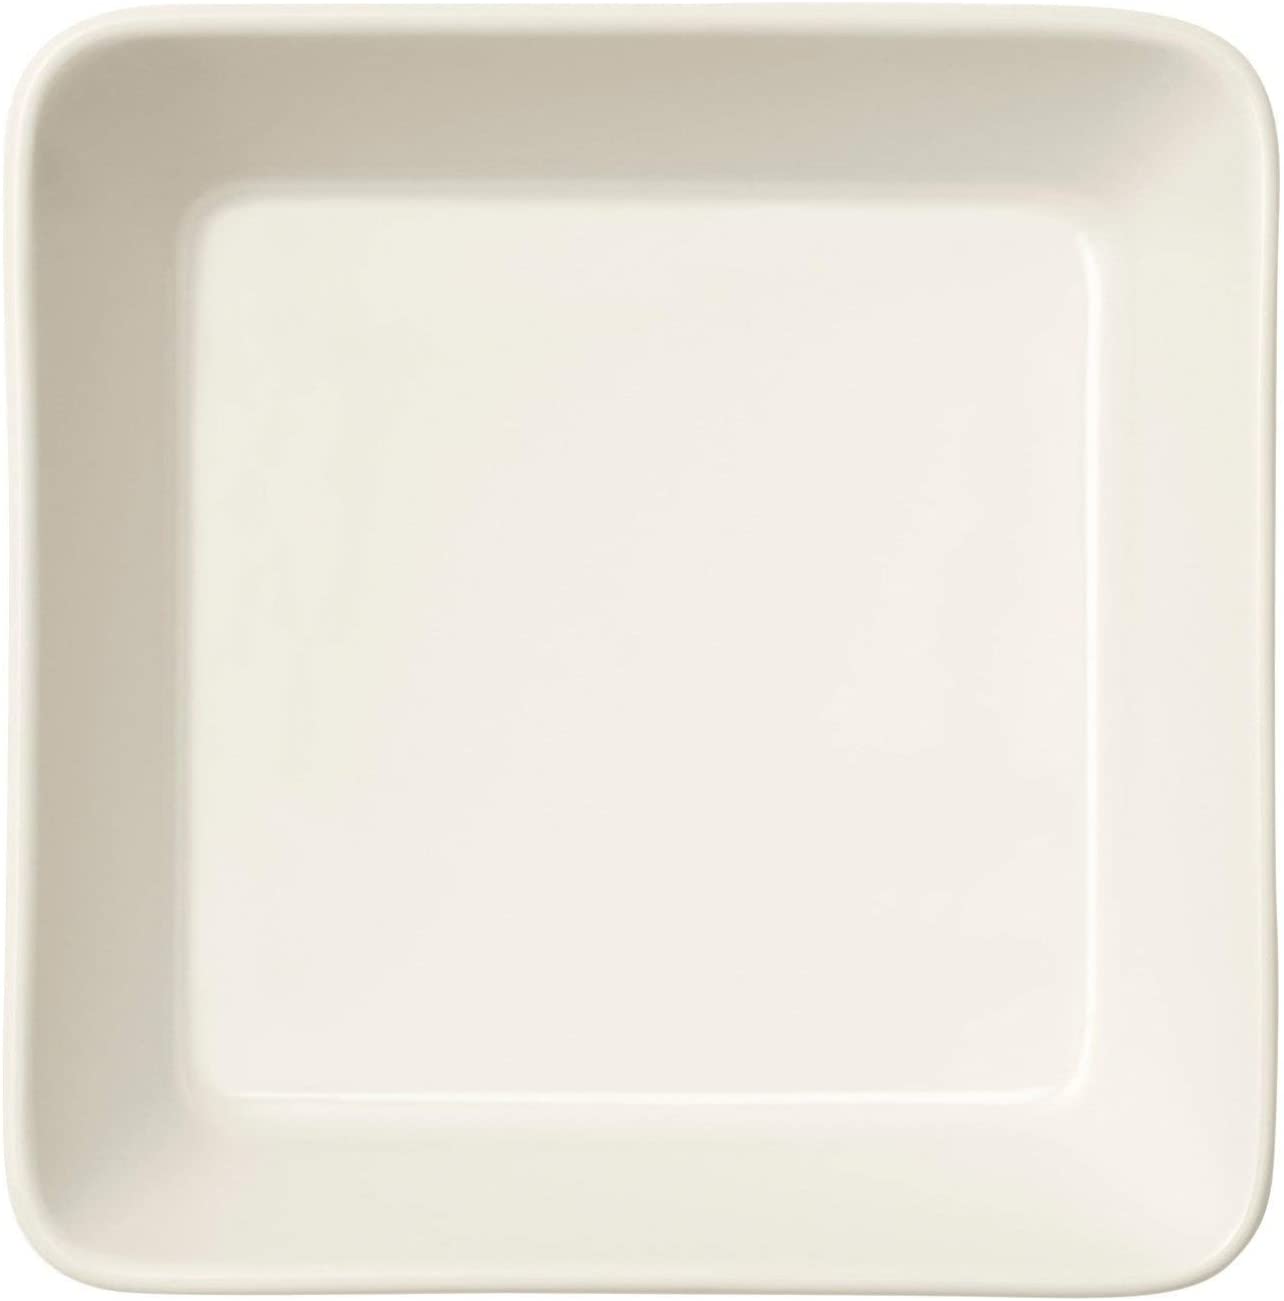 Teema White Square Dish 12cm by 12cm